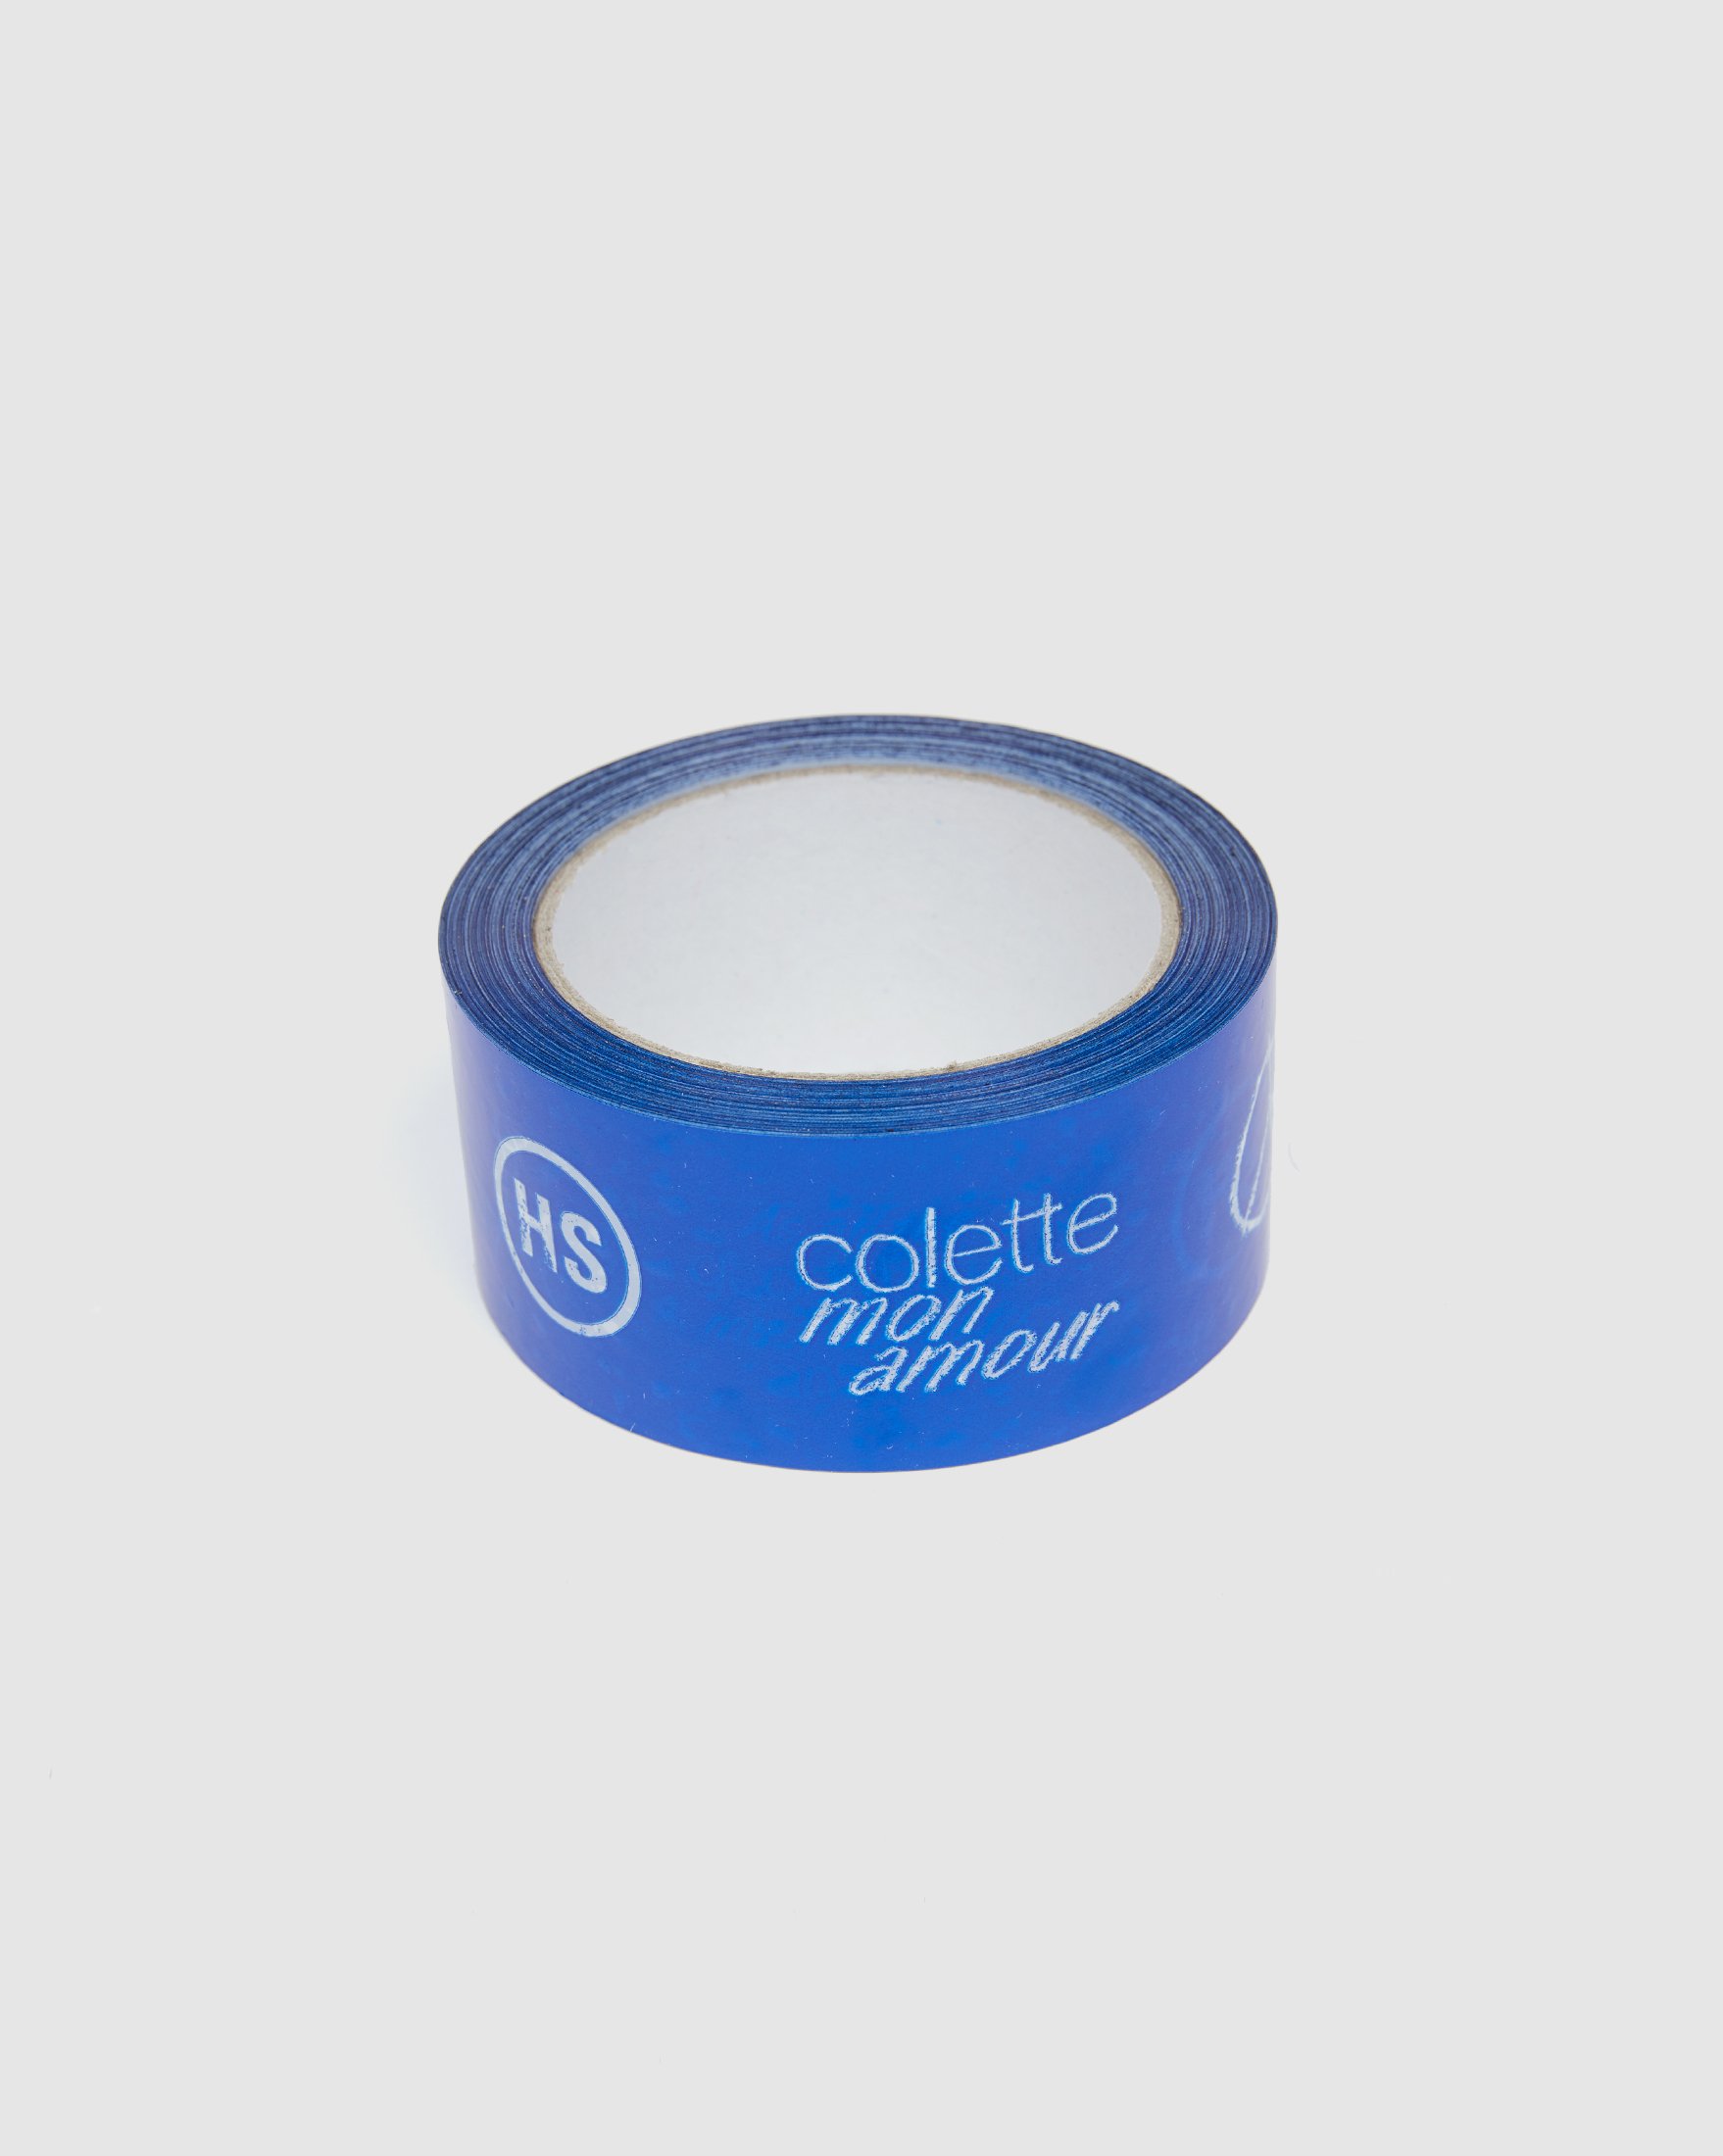 Colette Mon Amour - Blue Duct Tape - Stickers - Blue - Image 1